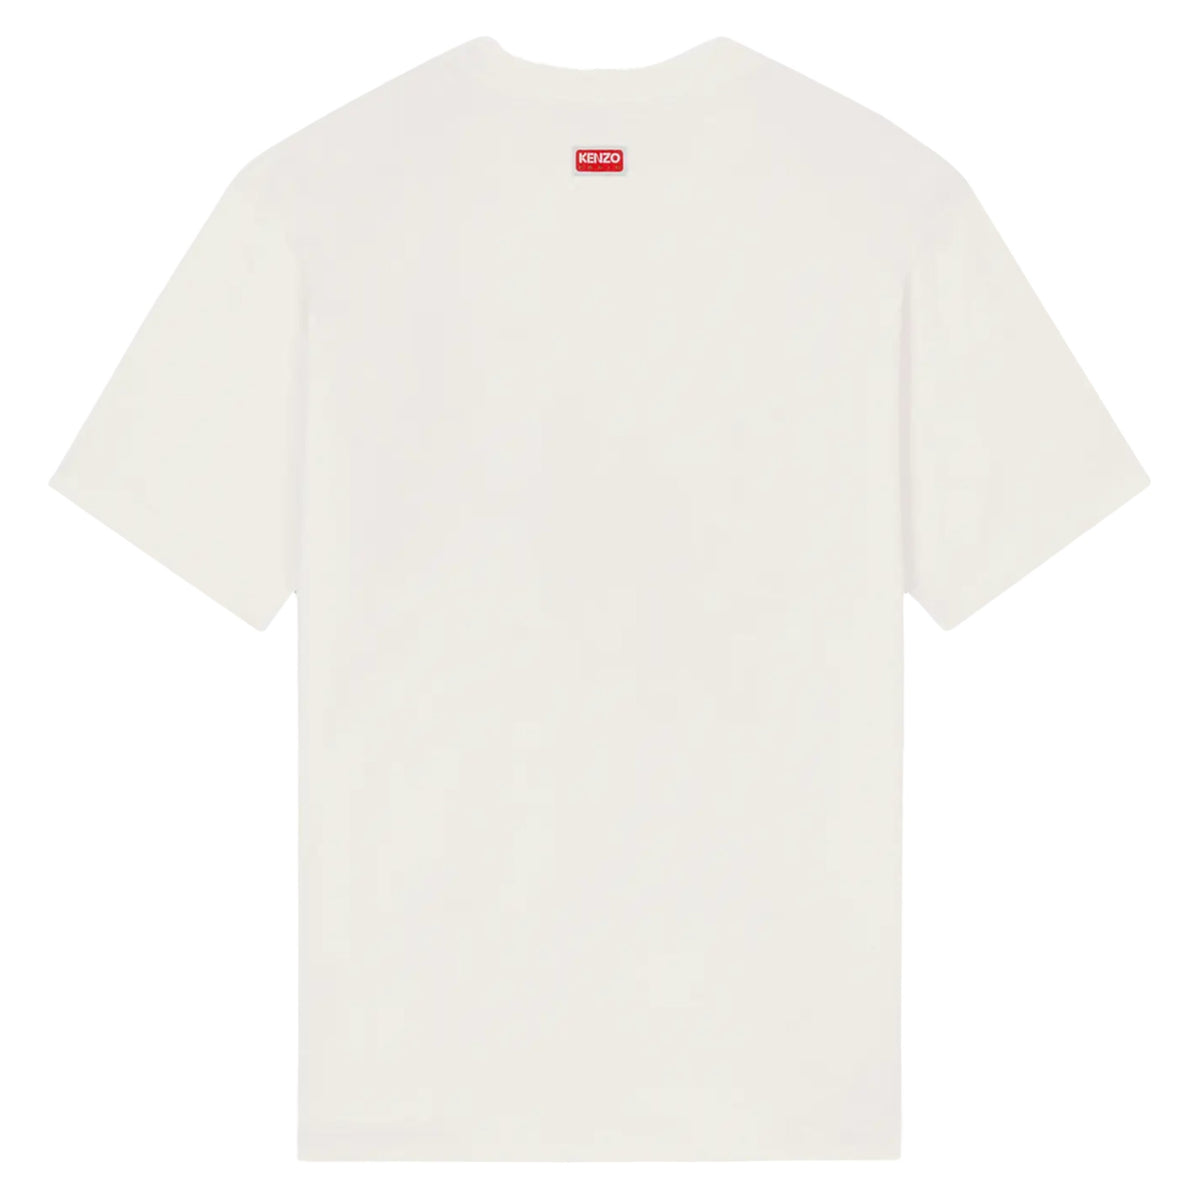 Kenzo Men's 'Kenzo Elephant' T-Shirt